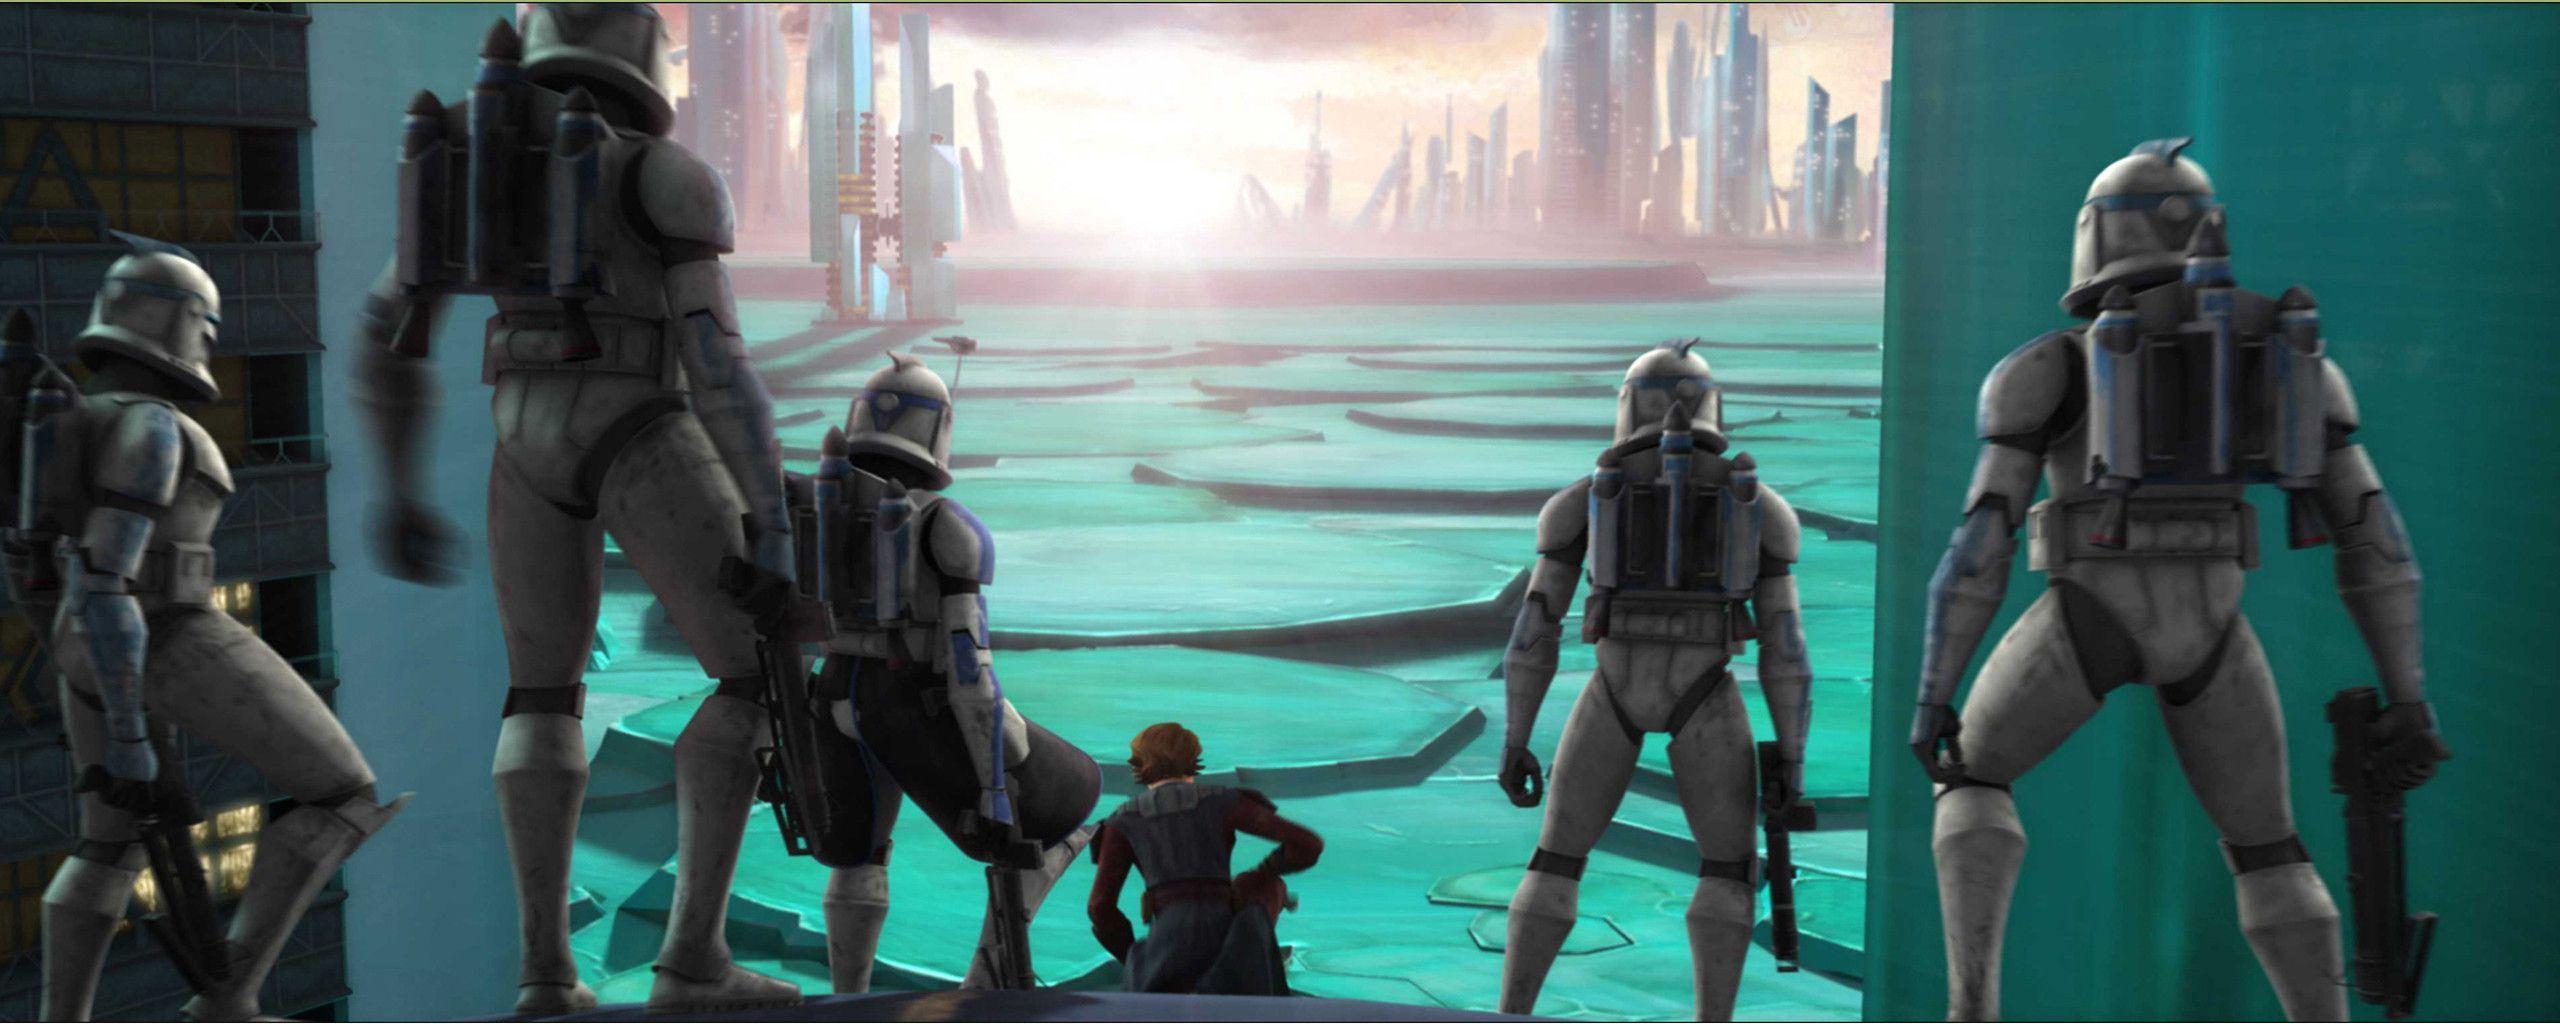 star wars clone wars scenery